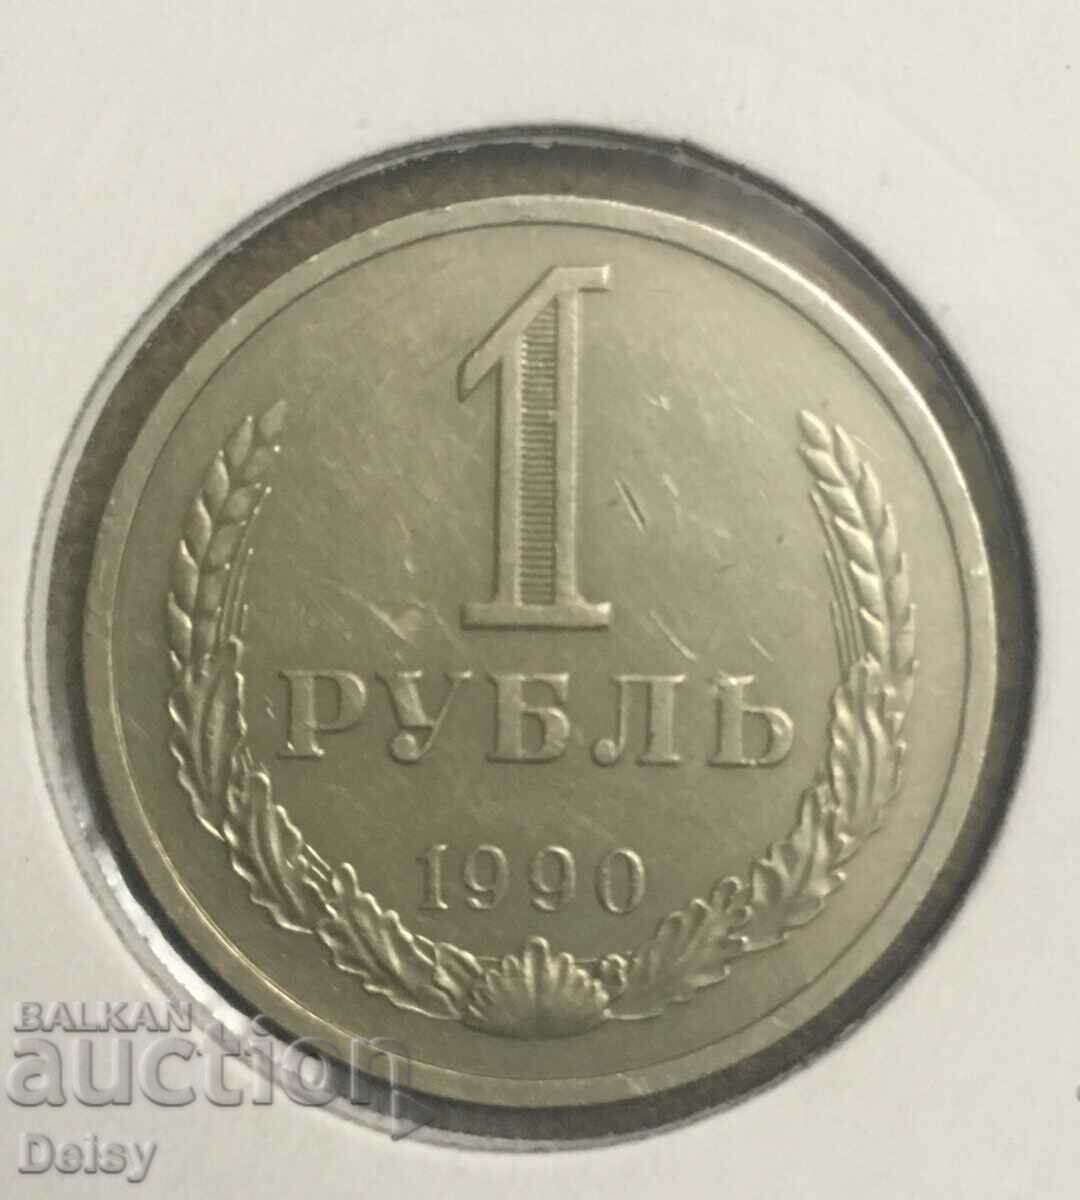 Russia (USSR) 1 ruble 1990